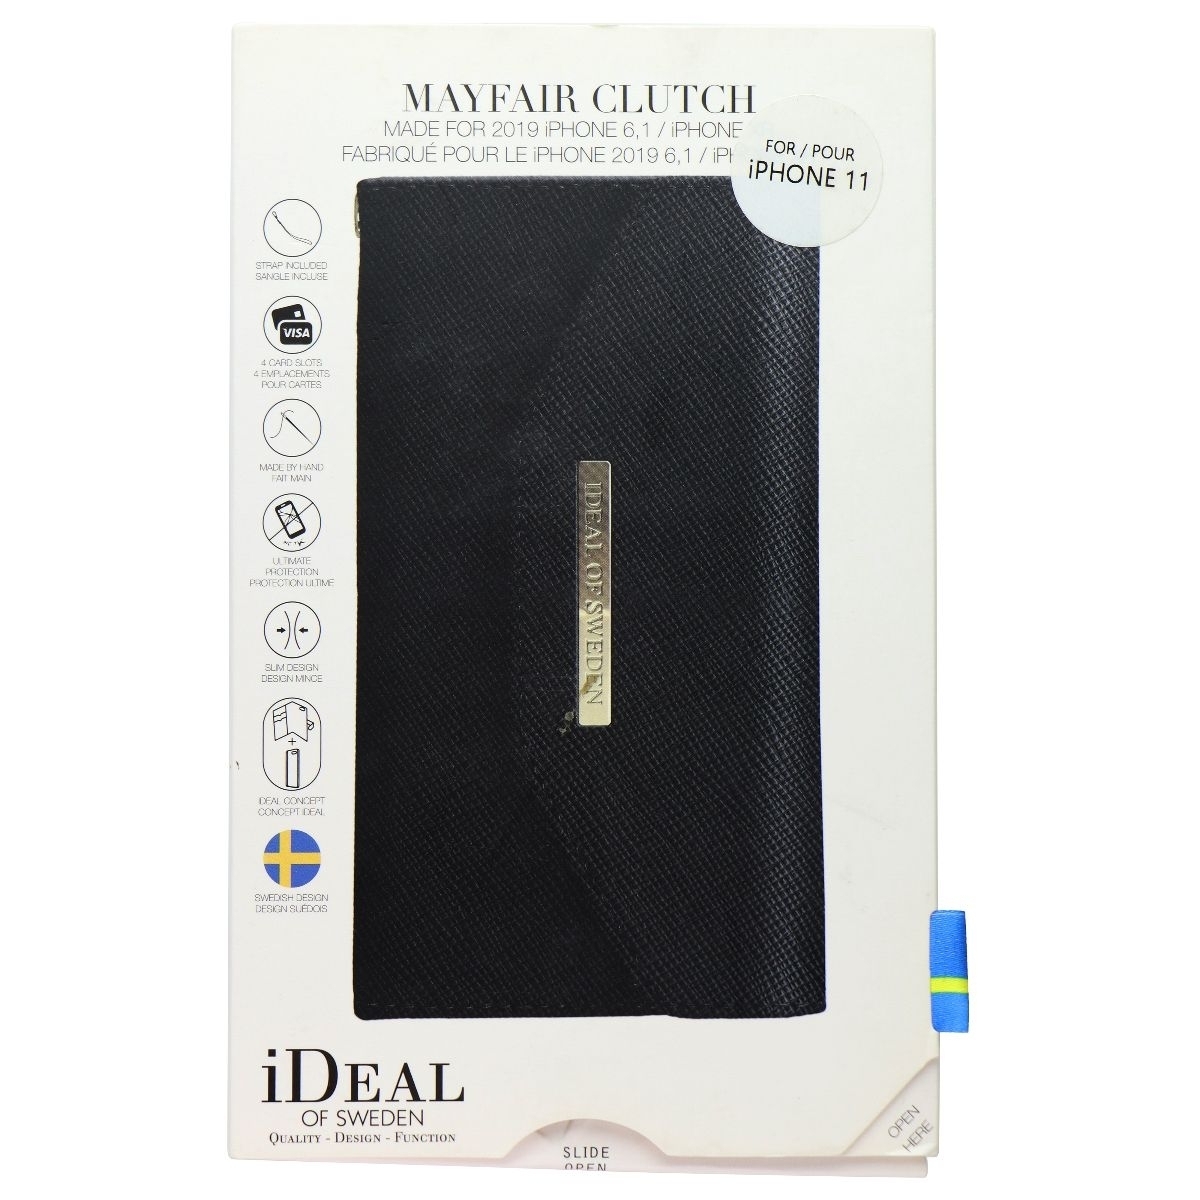 IDeal Of Sweden Mayfair Clutch Series Wallet Case For Apple IPhone 11 - Black (Refurbished)